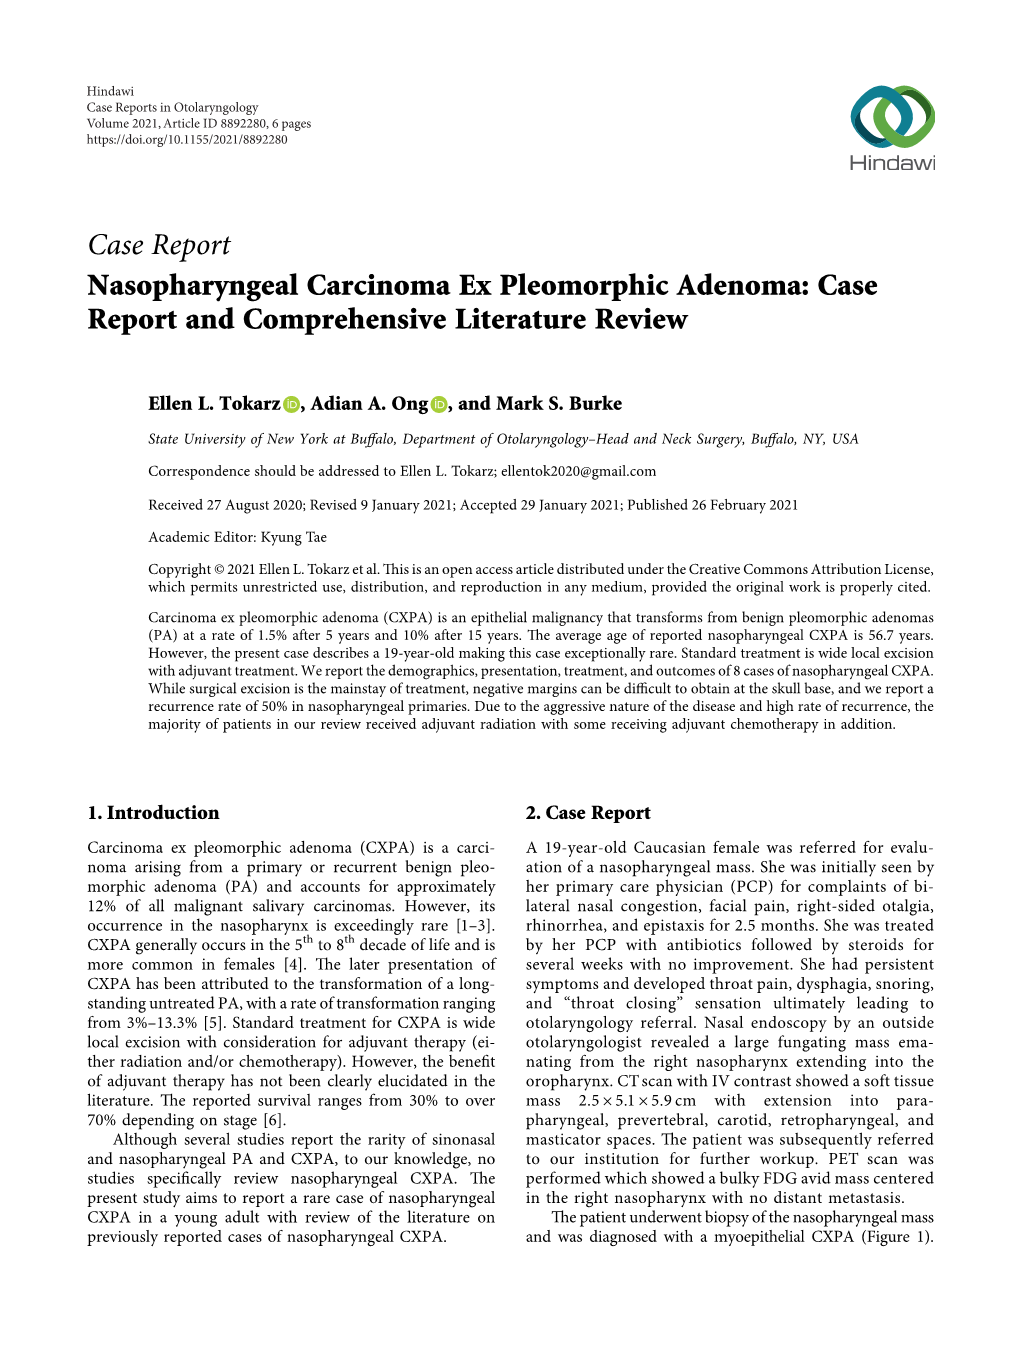 Case Report Nasopharyngeal Carcinoma Ex Pleomorphic Adenoma: Case Report and Comprehensive Literature Review